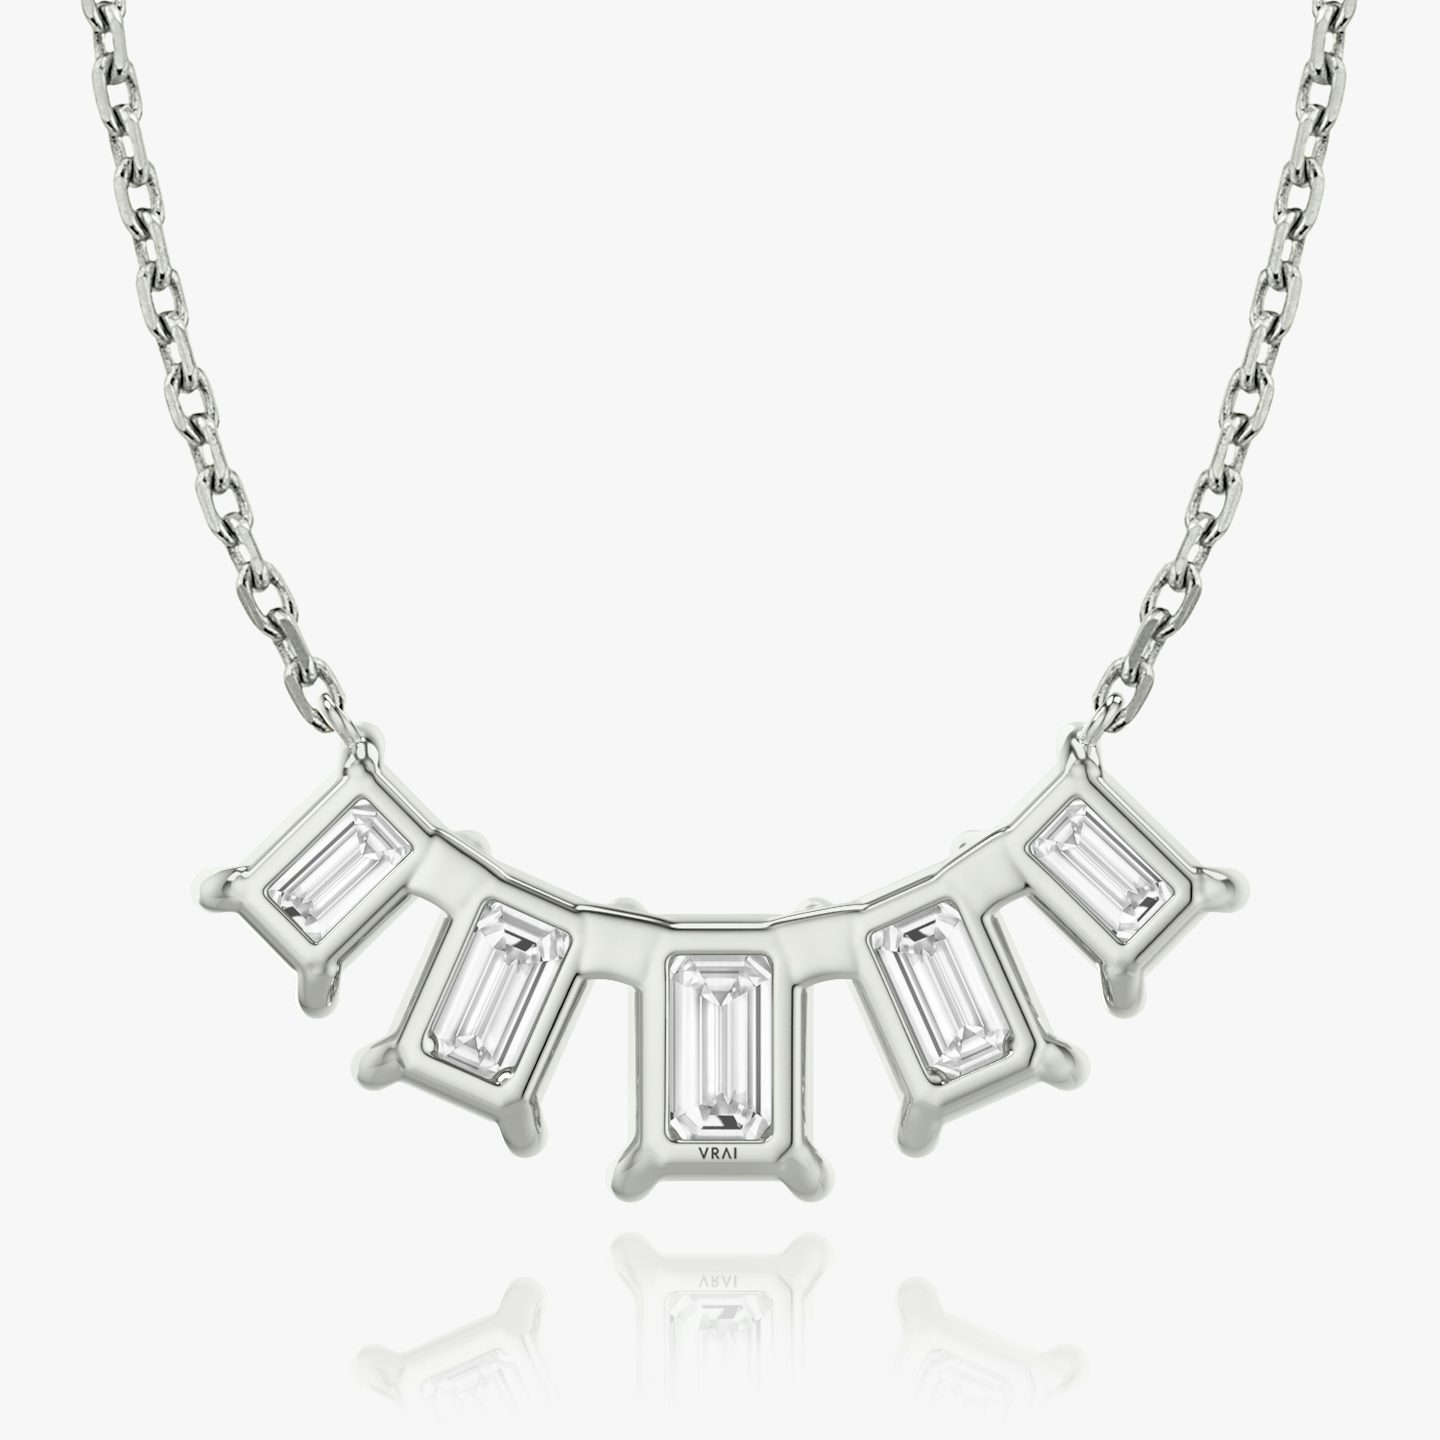 Arc Necklace | Emerald | 14k | White Gold | diamondCount: 5 | diamondSize: large | chainLength: 16-18